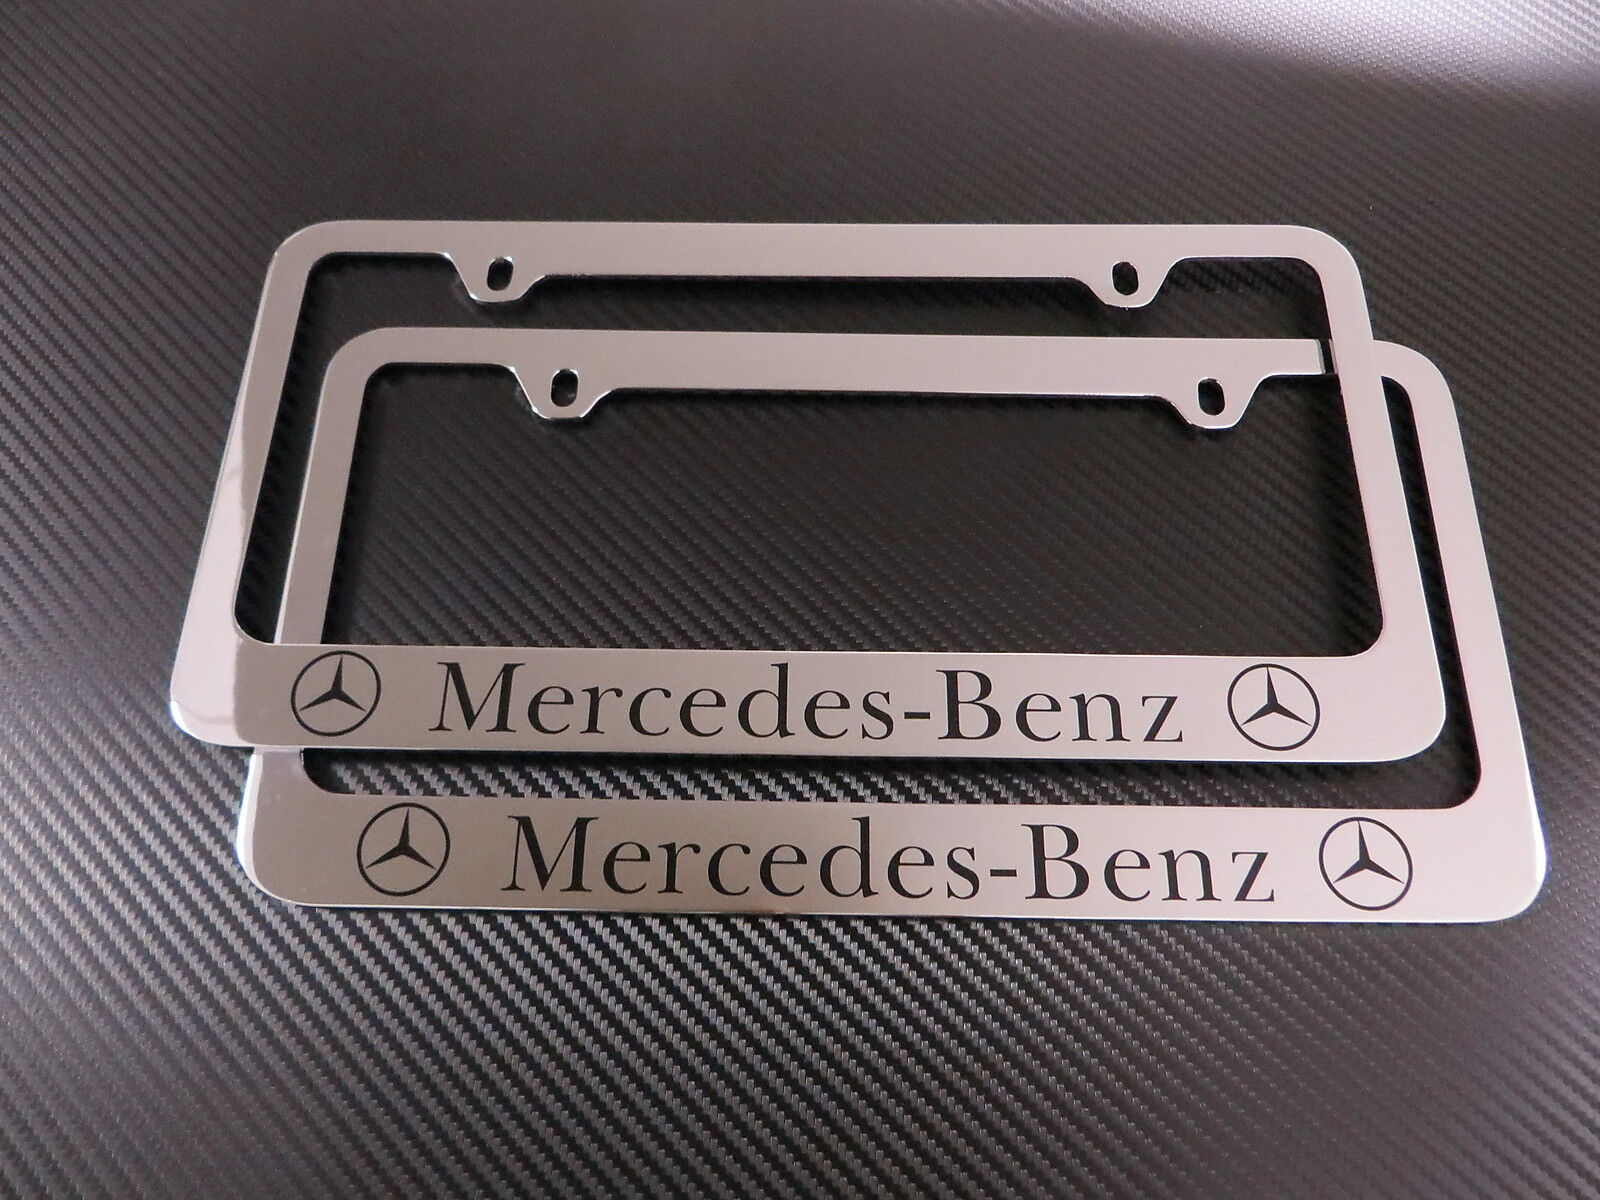 2 Brand New MERCEDES-BENZ C-Class chromed METAL license plate frame +screw caps